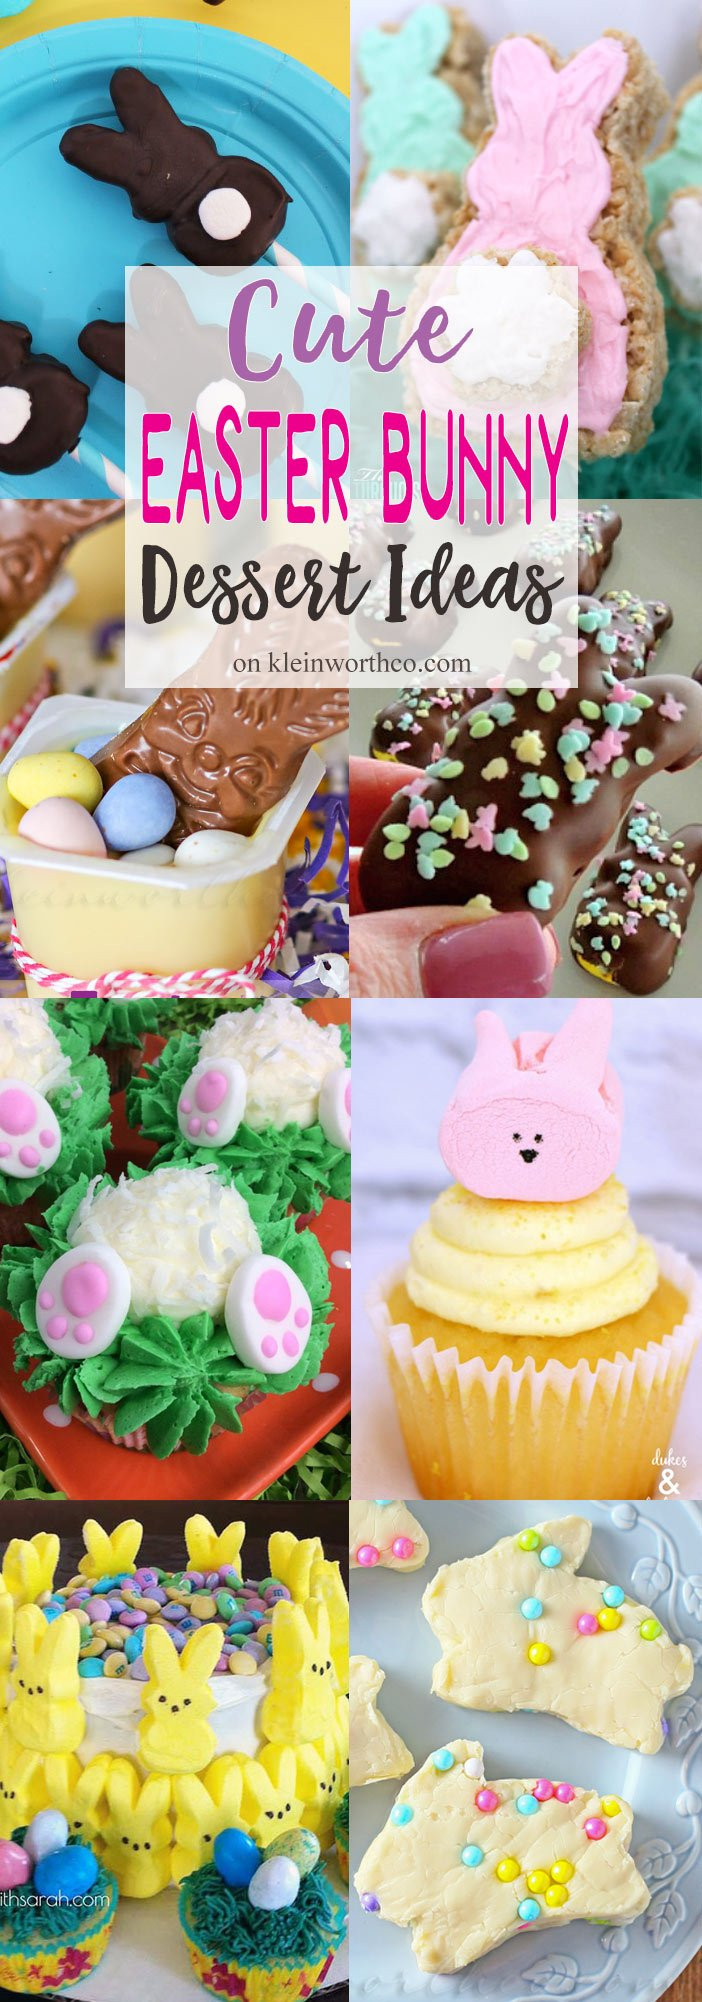 Easter Dessert Ideas Pinterest
 Cute Easter Bunny Dessert Ideas Kleinworth & Co